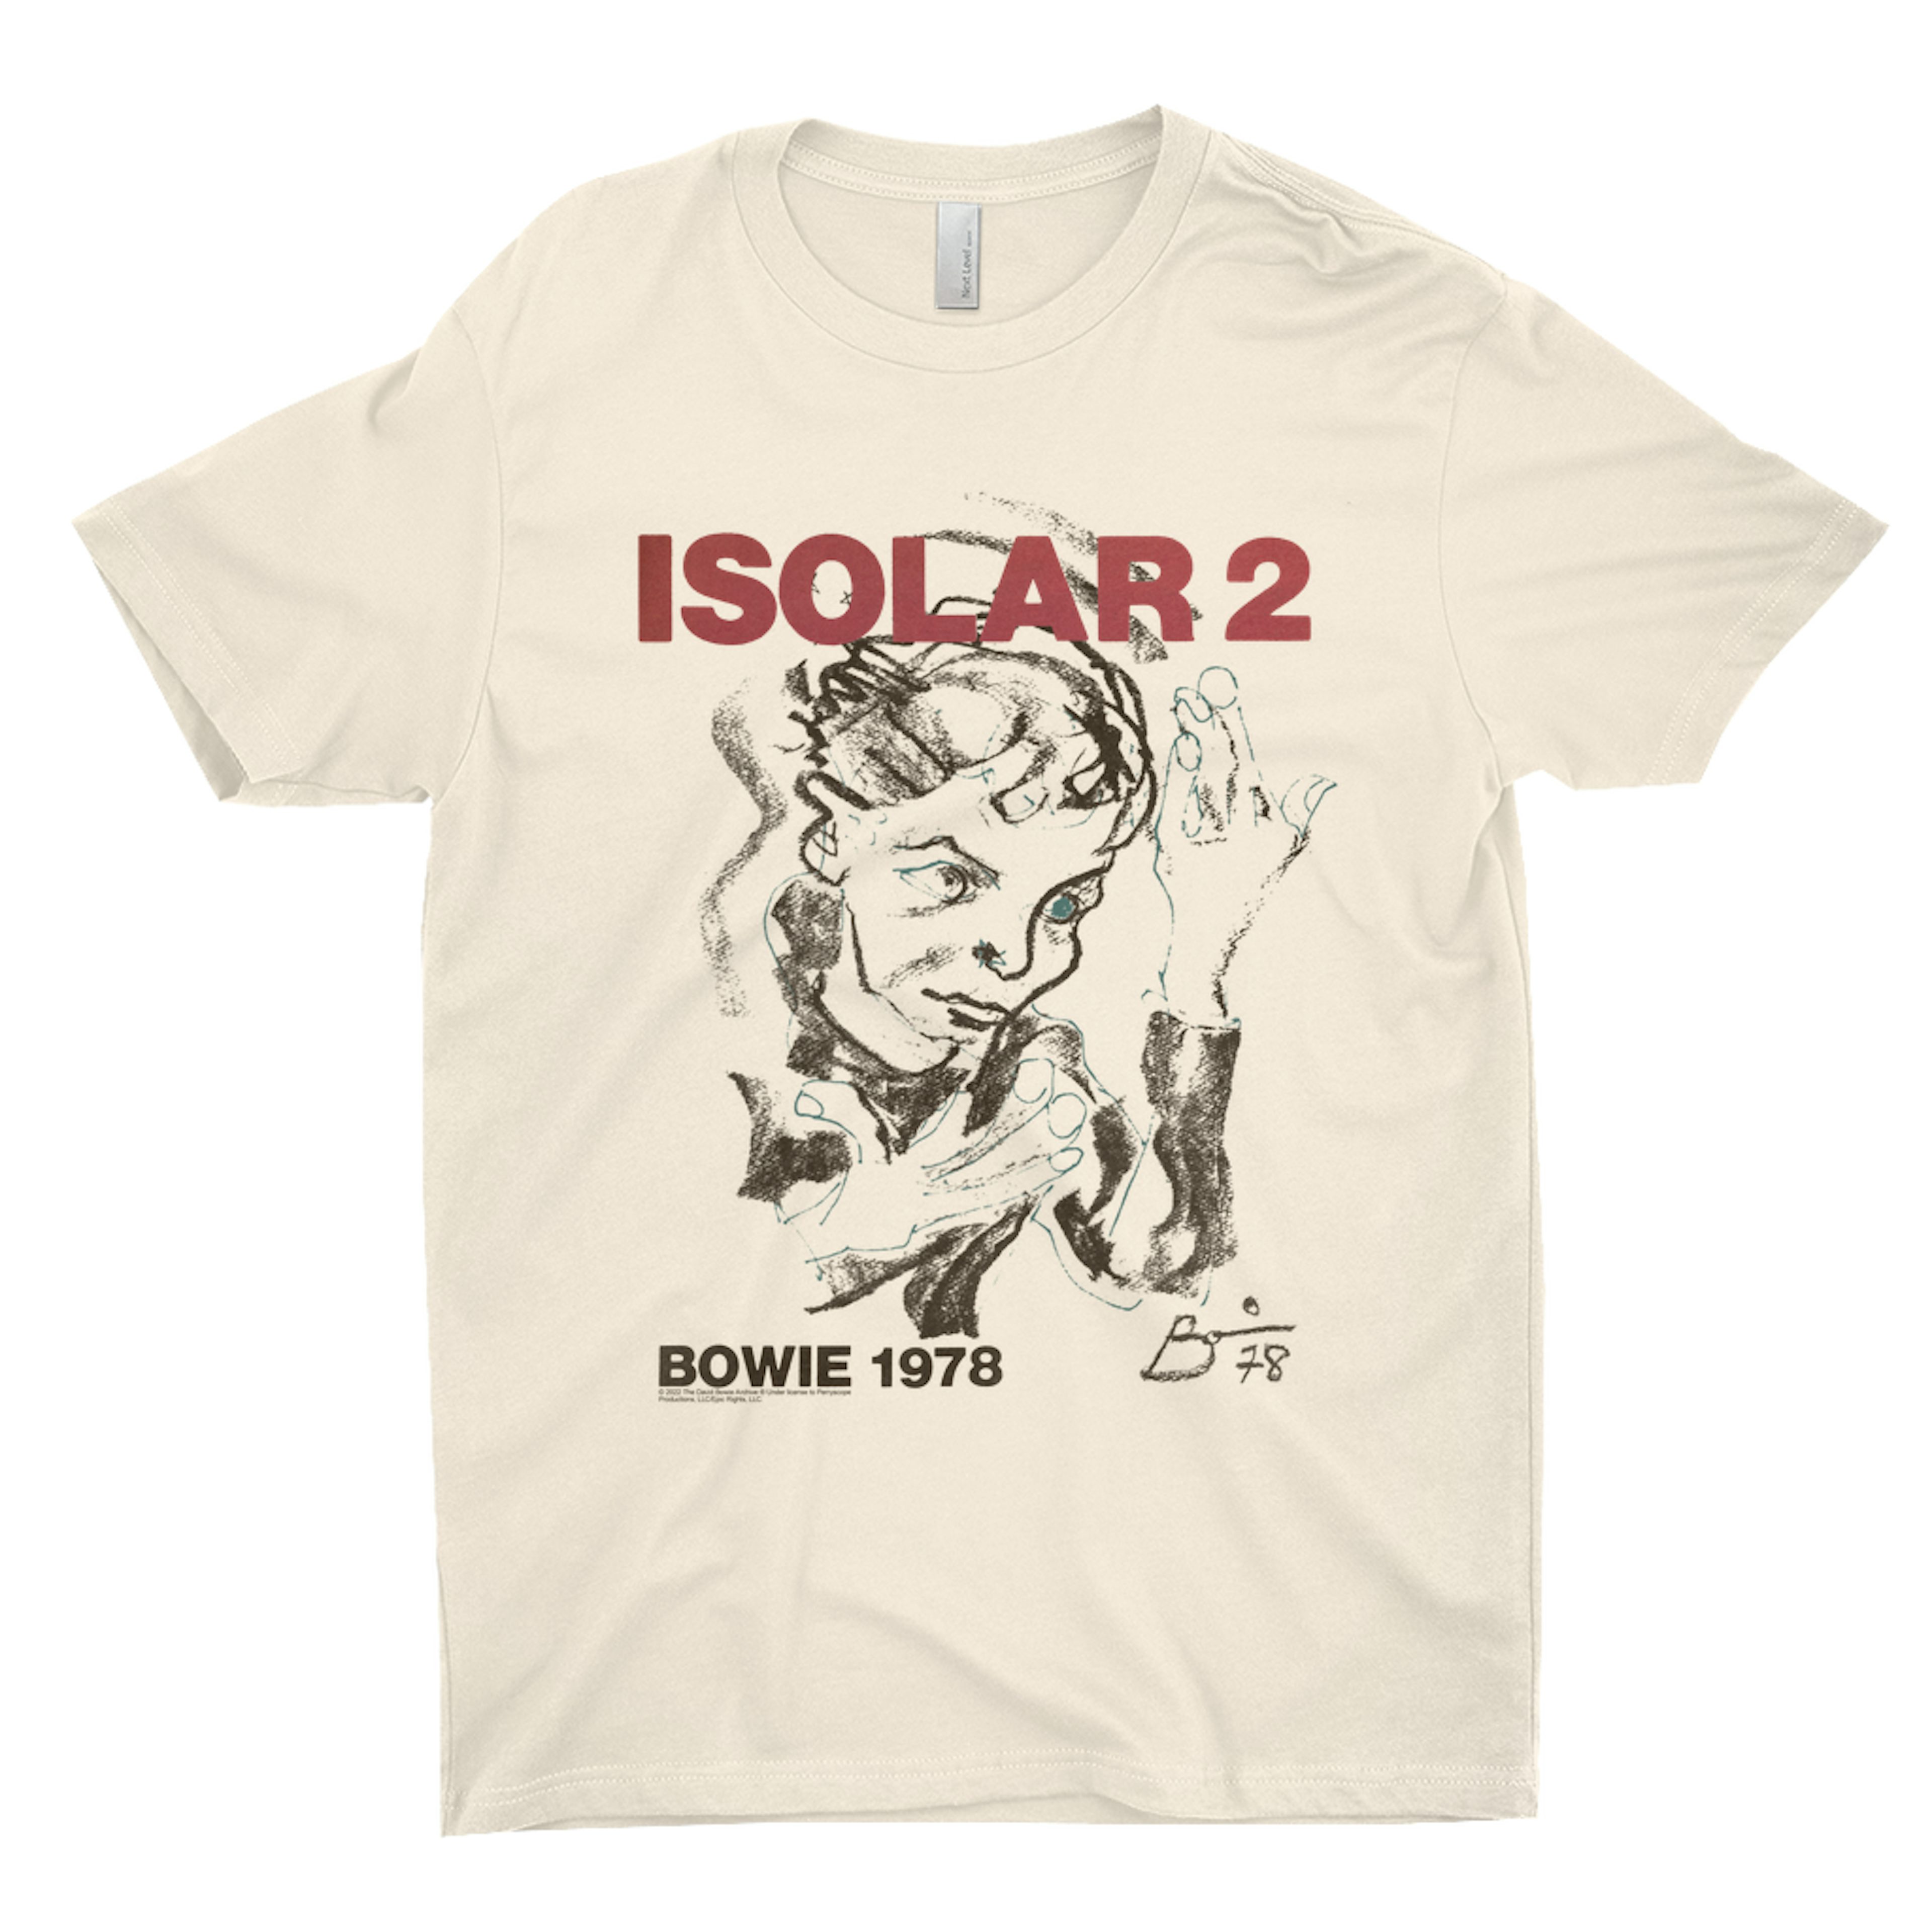 David Bowie T-Shirt | Isolar 2 1978 Concert Poster David Bowie Shirt